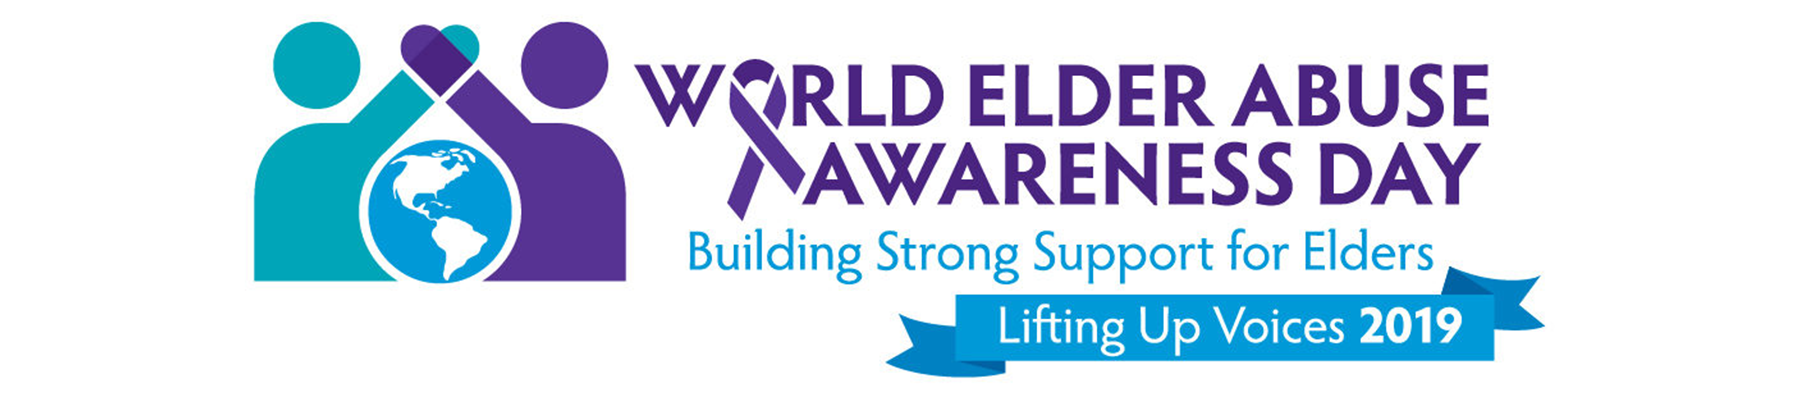 World Elder Abuse Awareness Day(WEAAD)  2021 Virtual Series